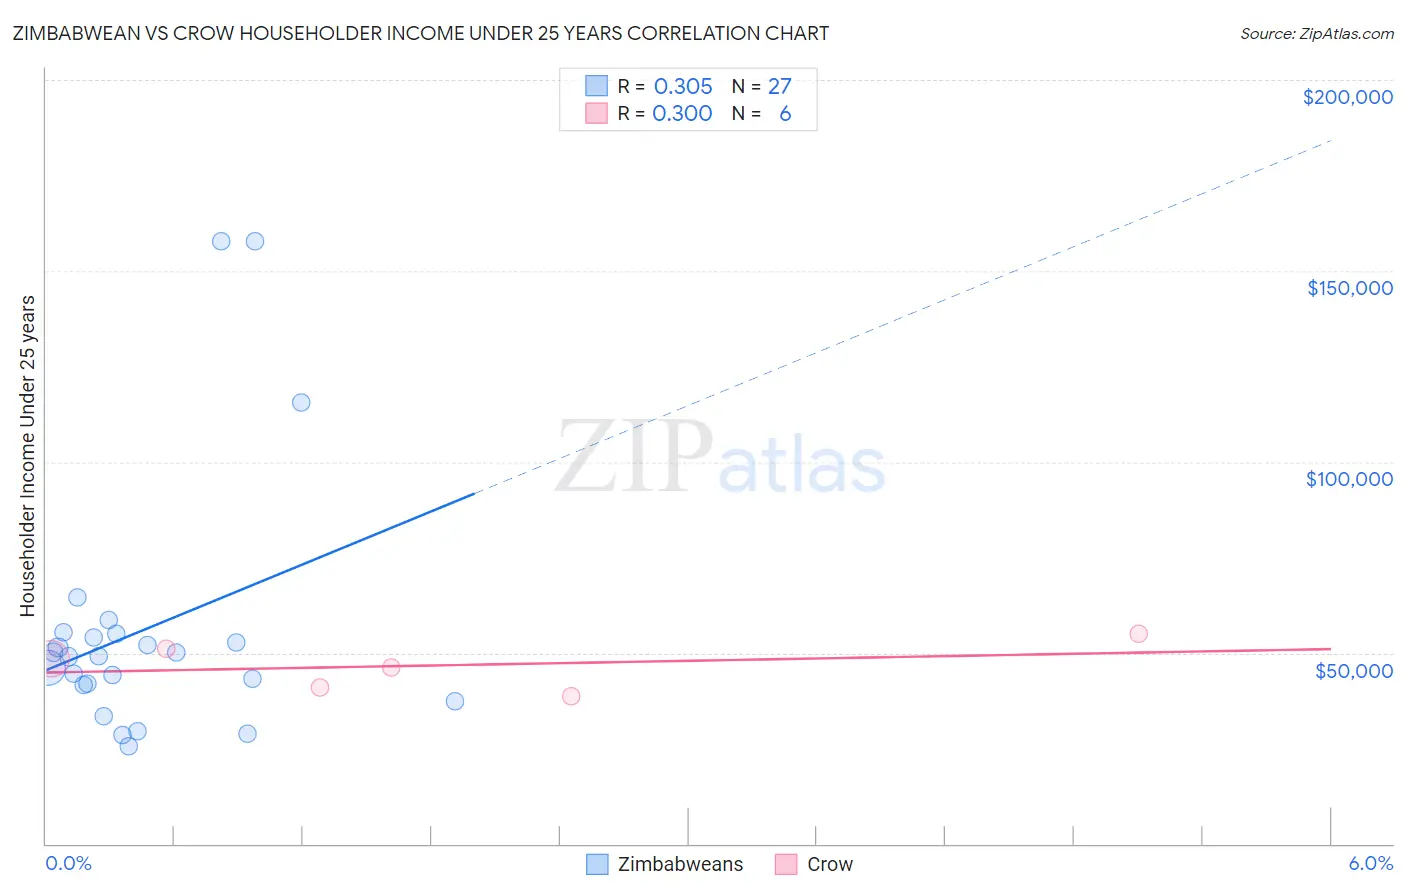 Zimbabwean vs Crow Householder Income Under 25 years